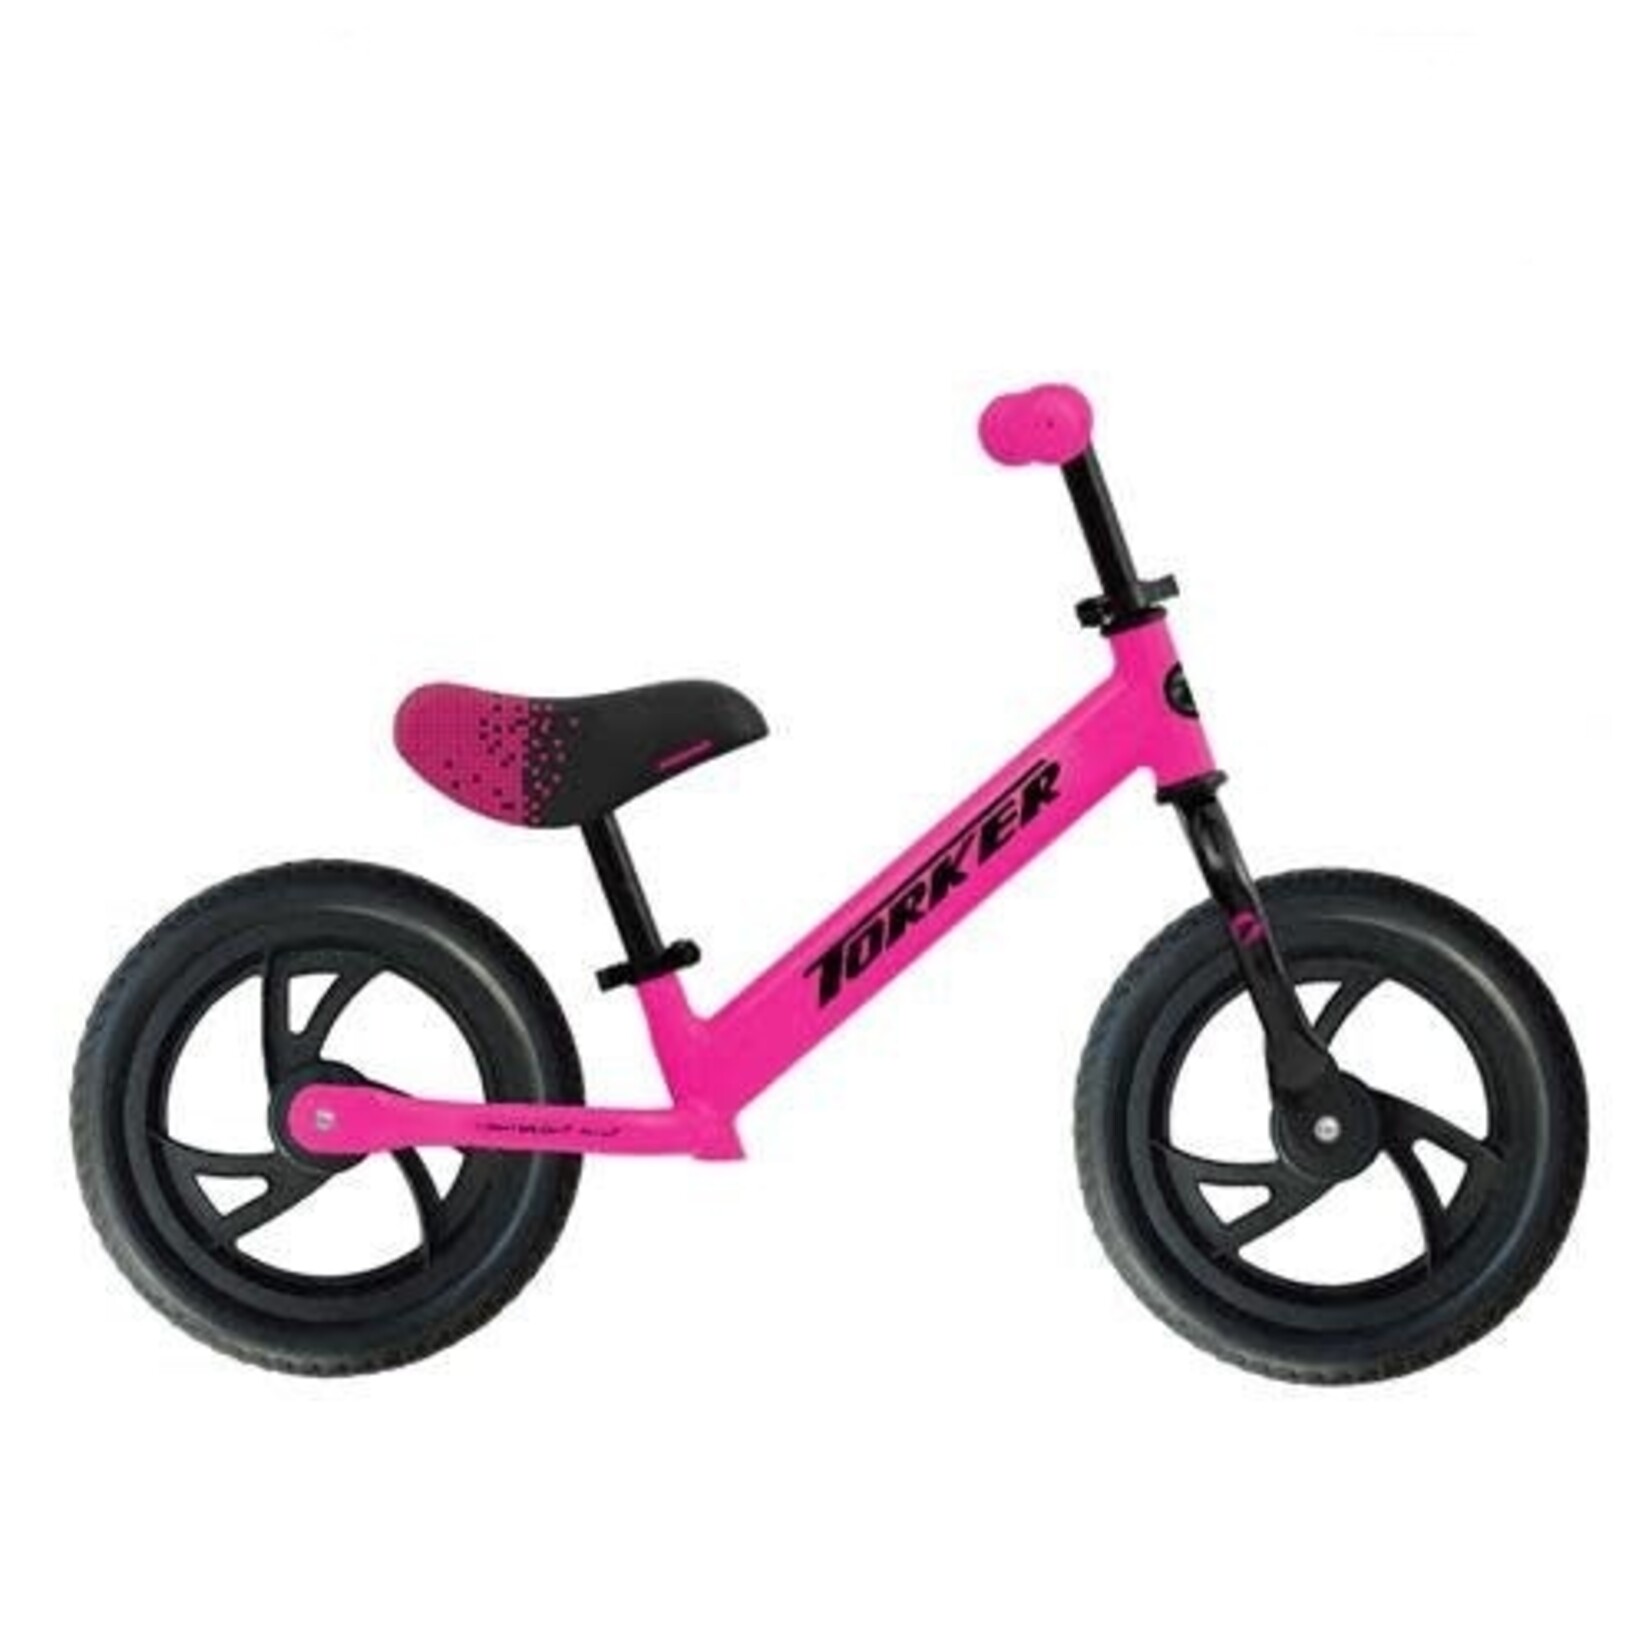 Torker Torker Kid Balance Bike Wheels Suit Children 18 Months-5 Years - Pink With Black